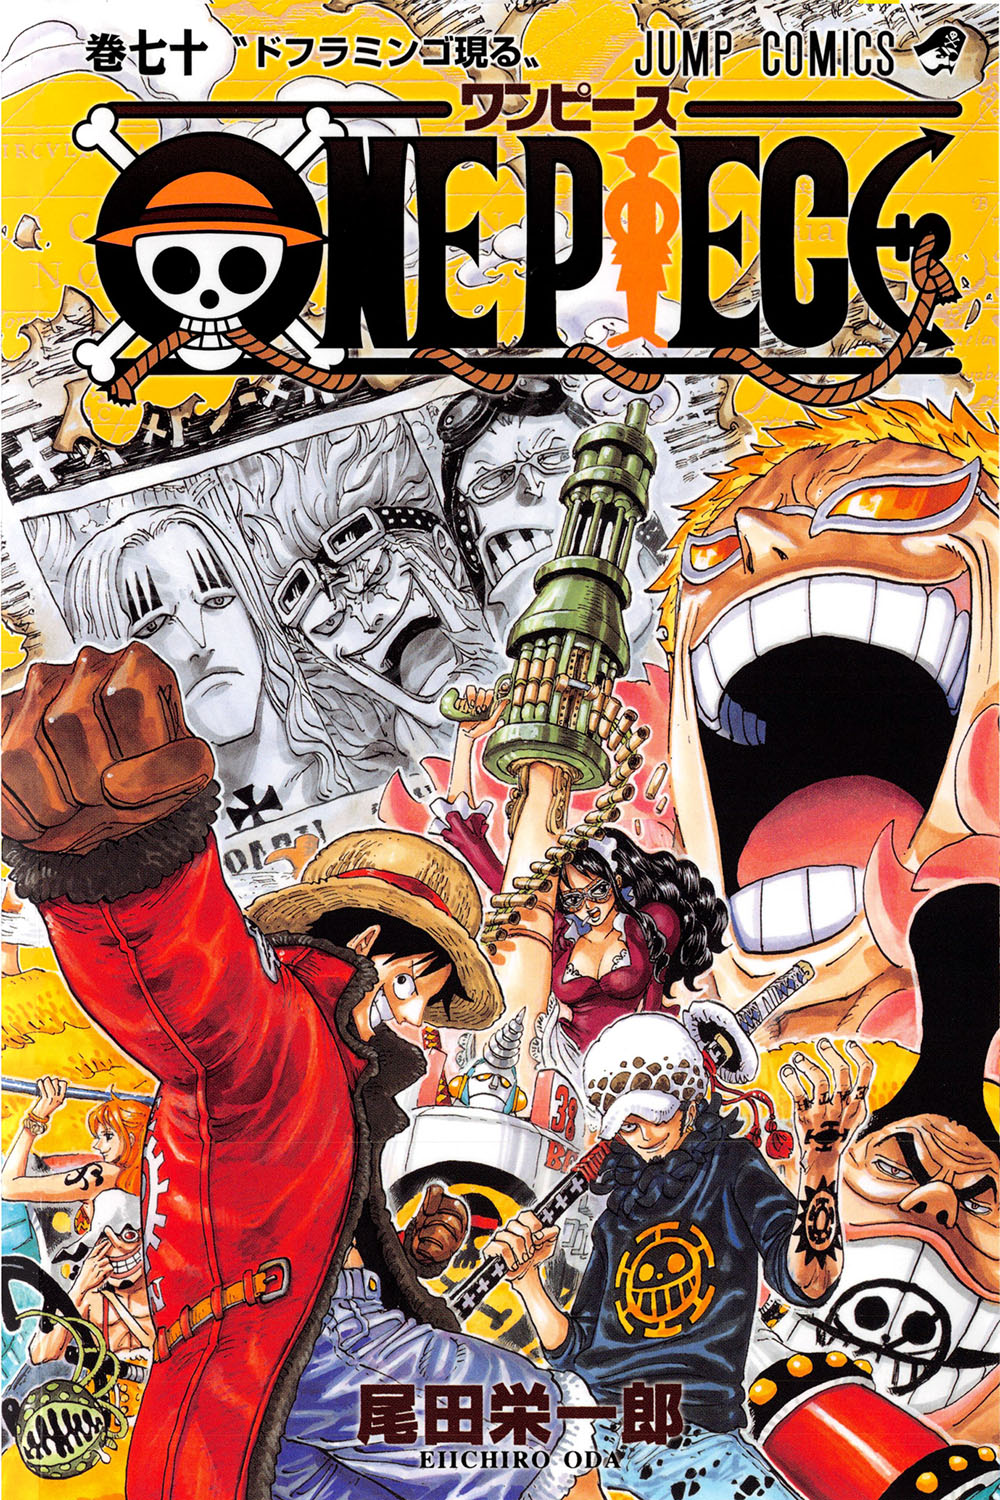 The 25 Most Anticipated Manga Ending Haruhichan.com One Piece manga cover